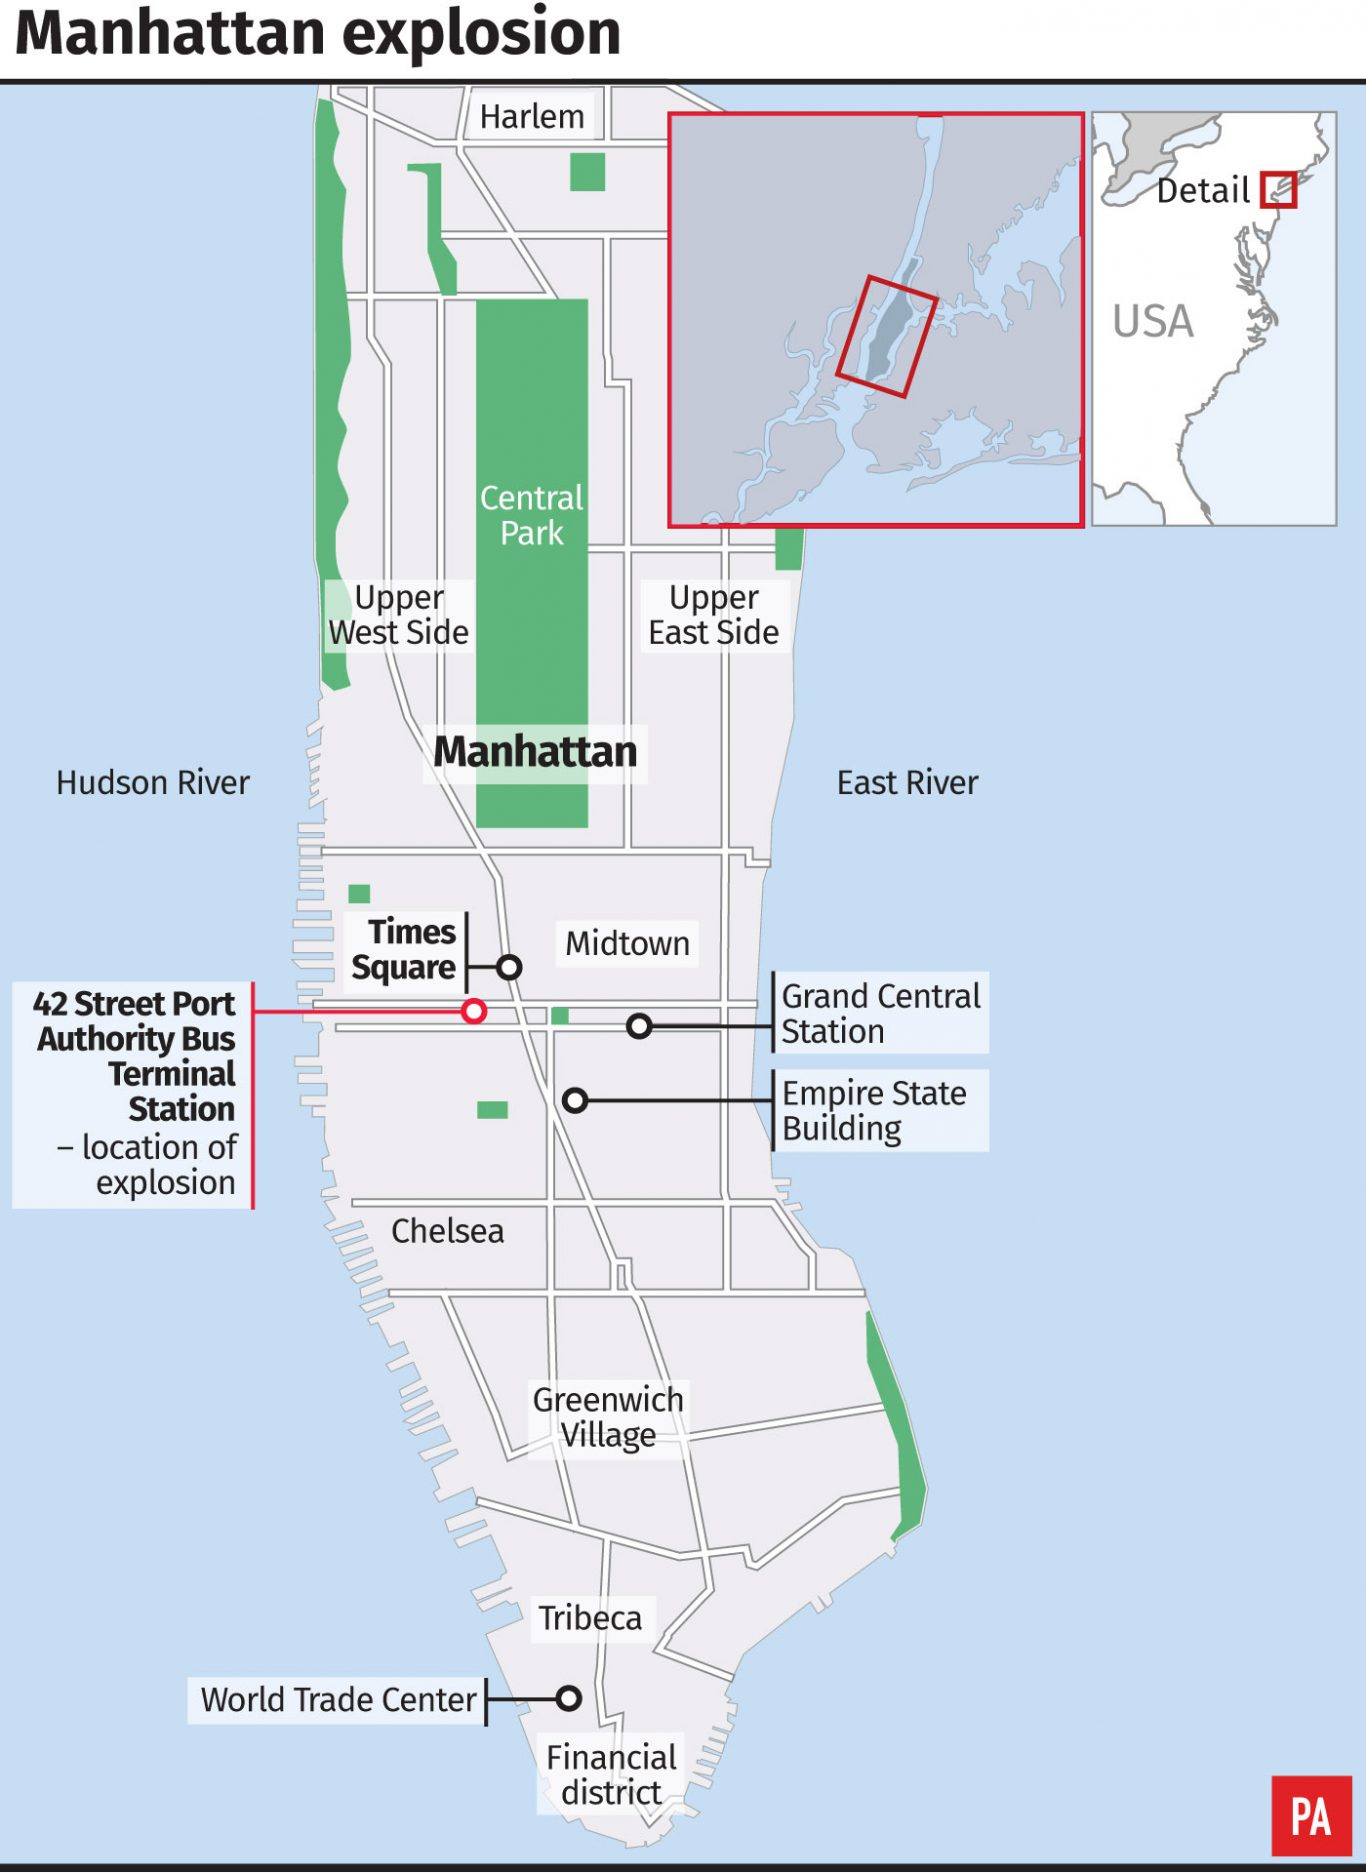 Manhattan explosion location